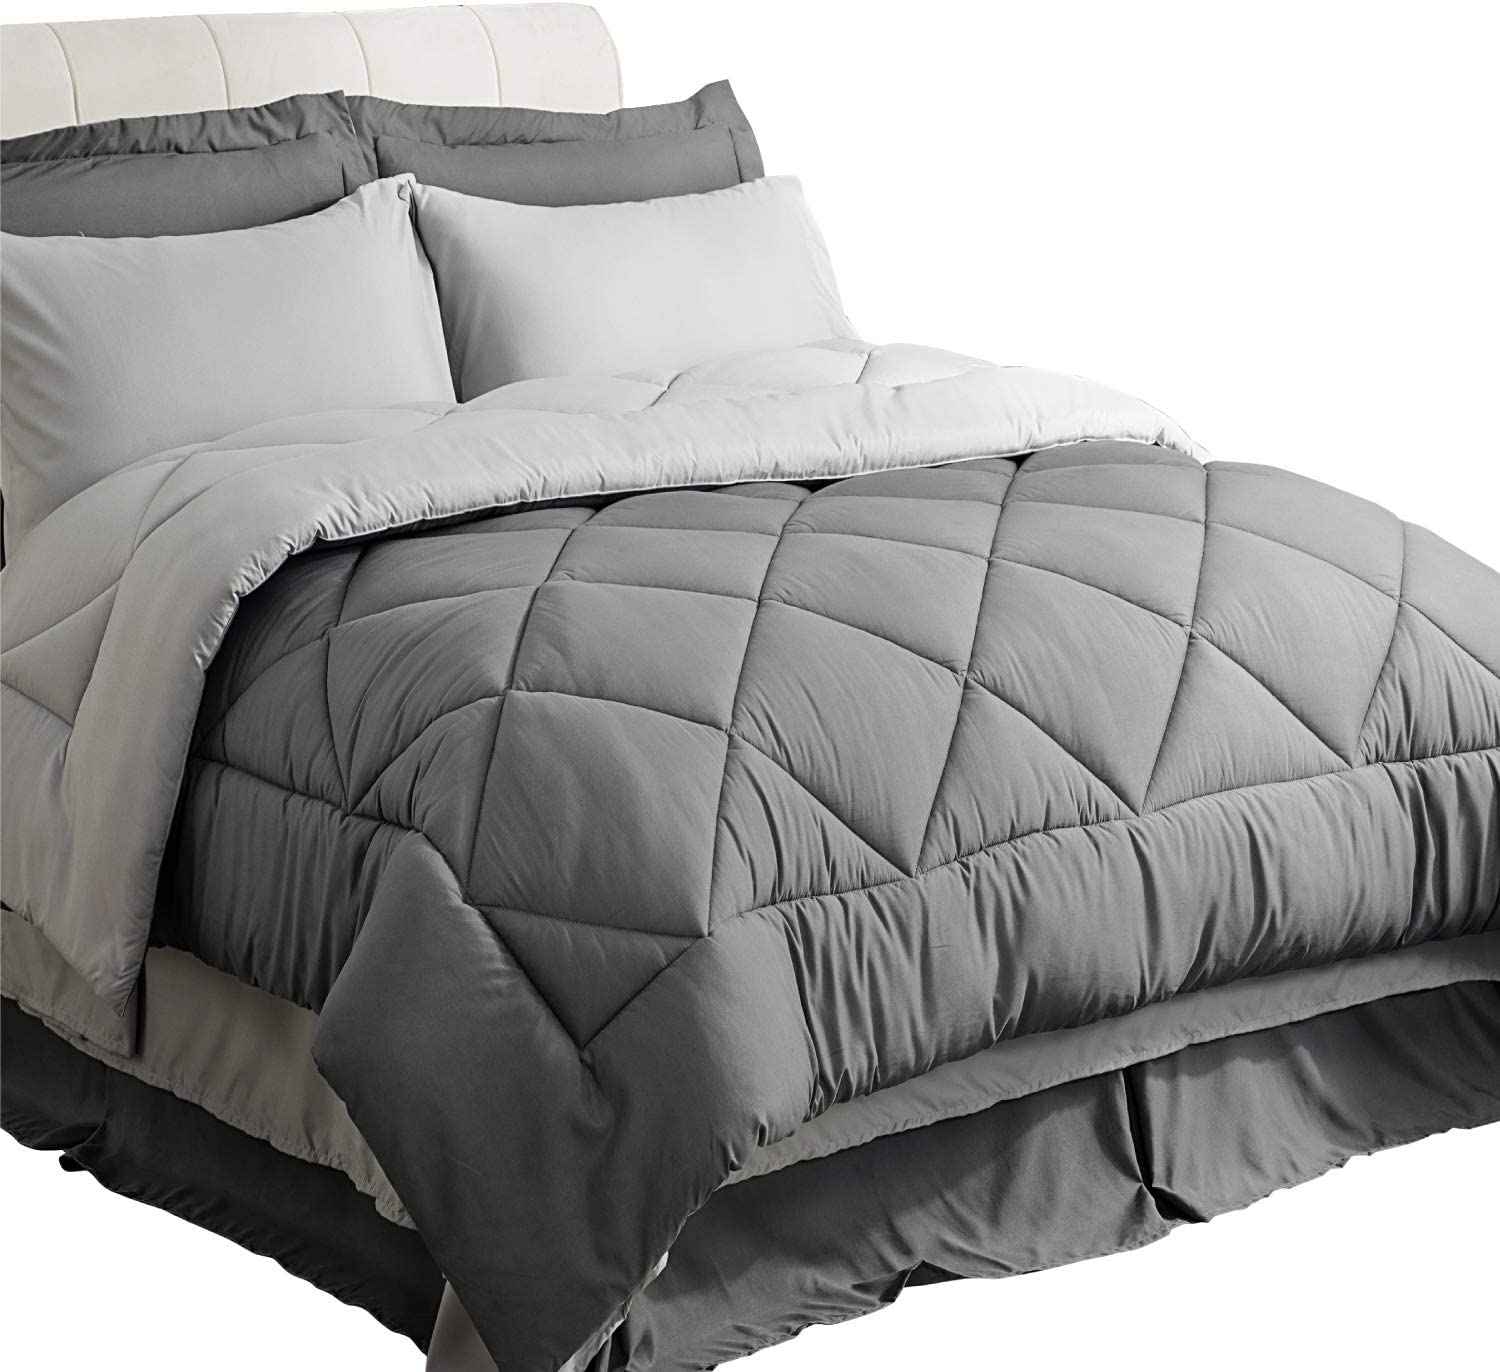 Bedsure Fluffy Reversible Queen Comforter Set, 8-Piece